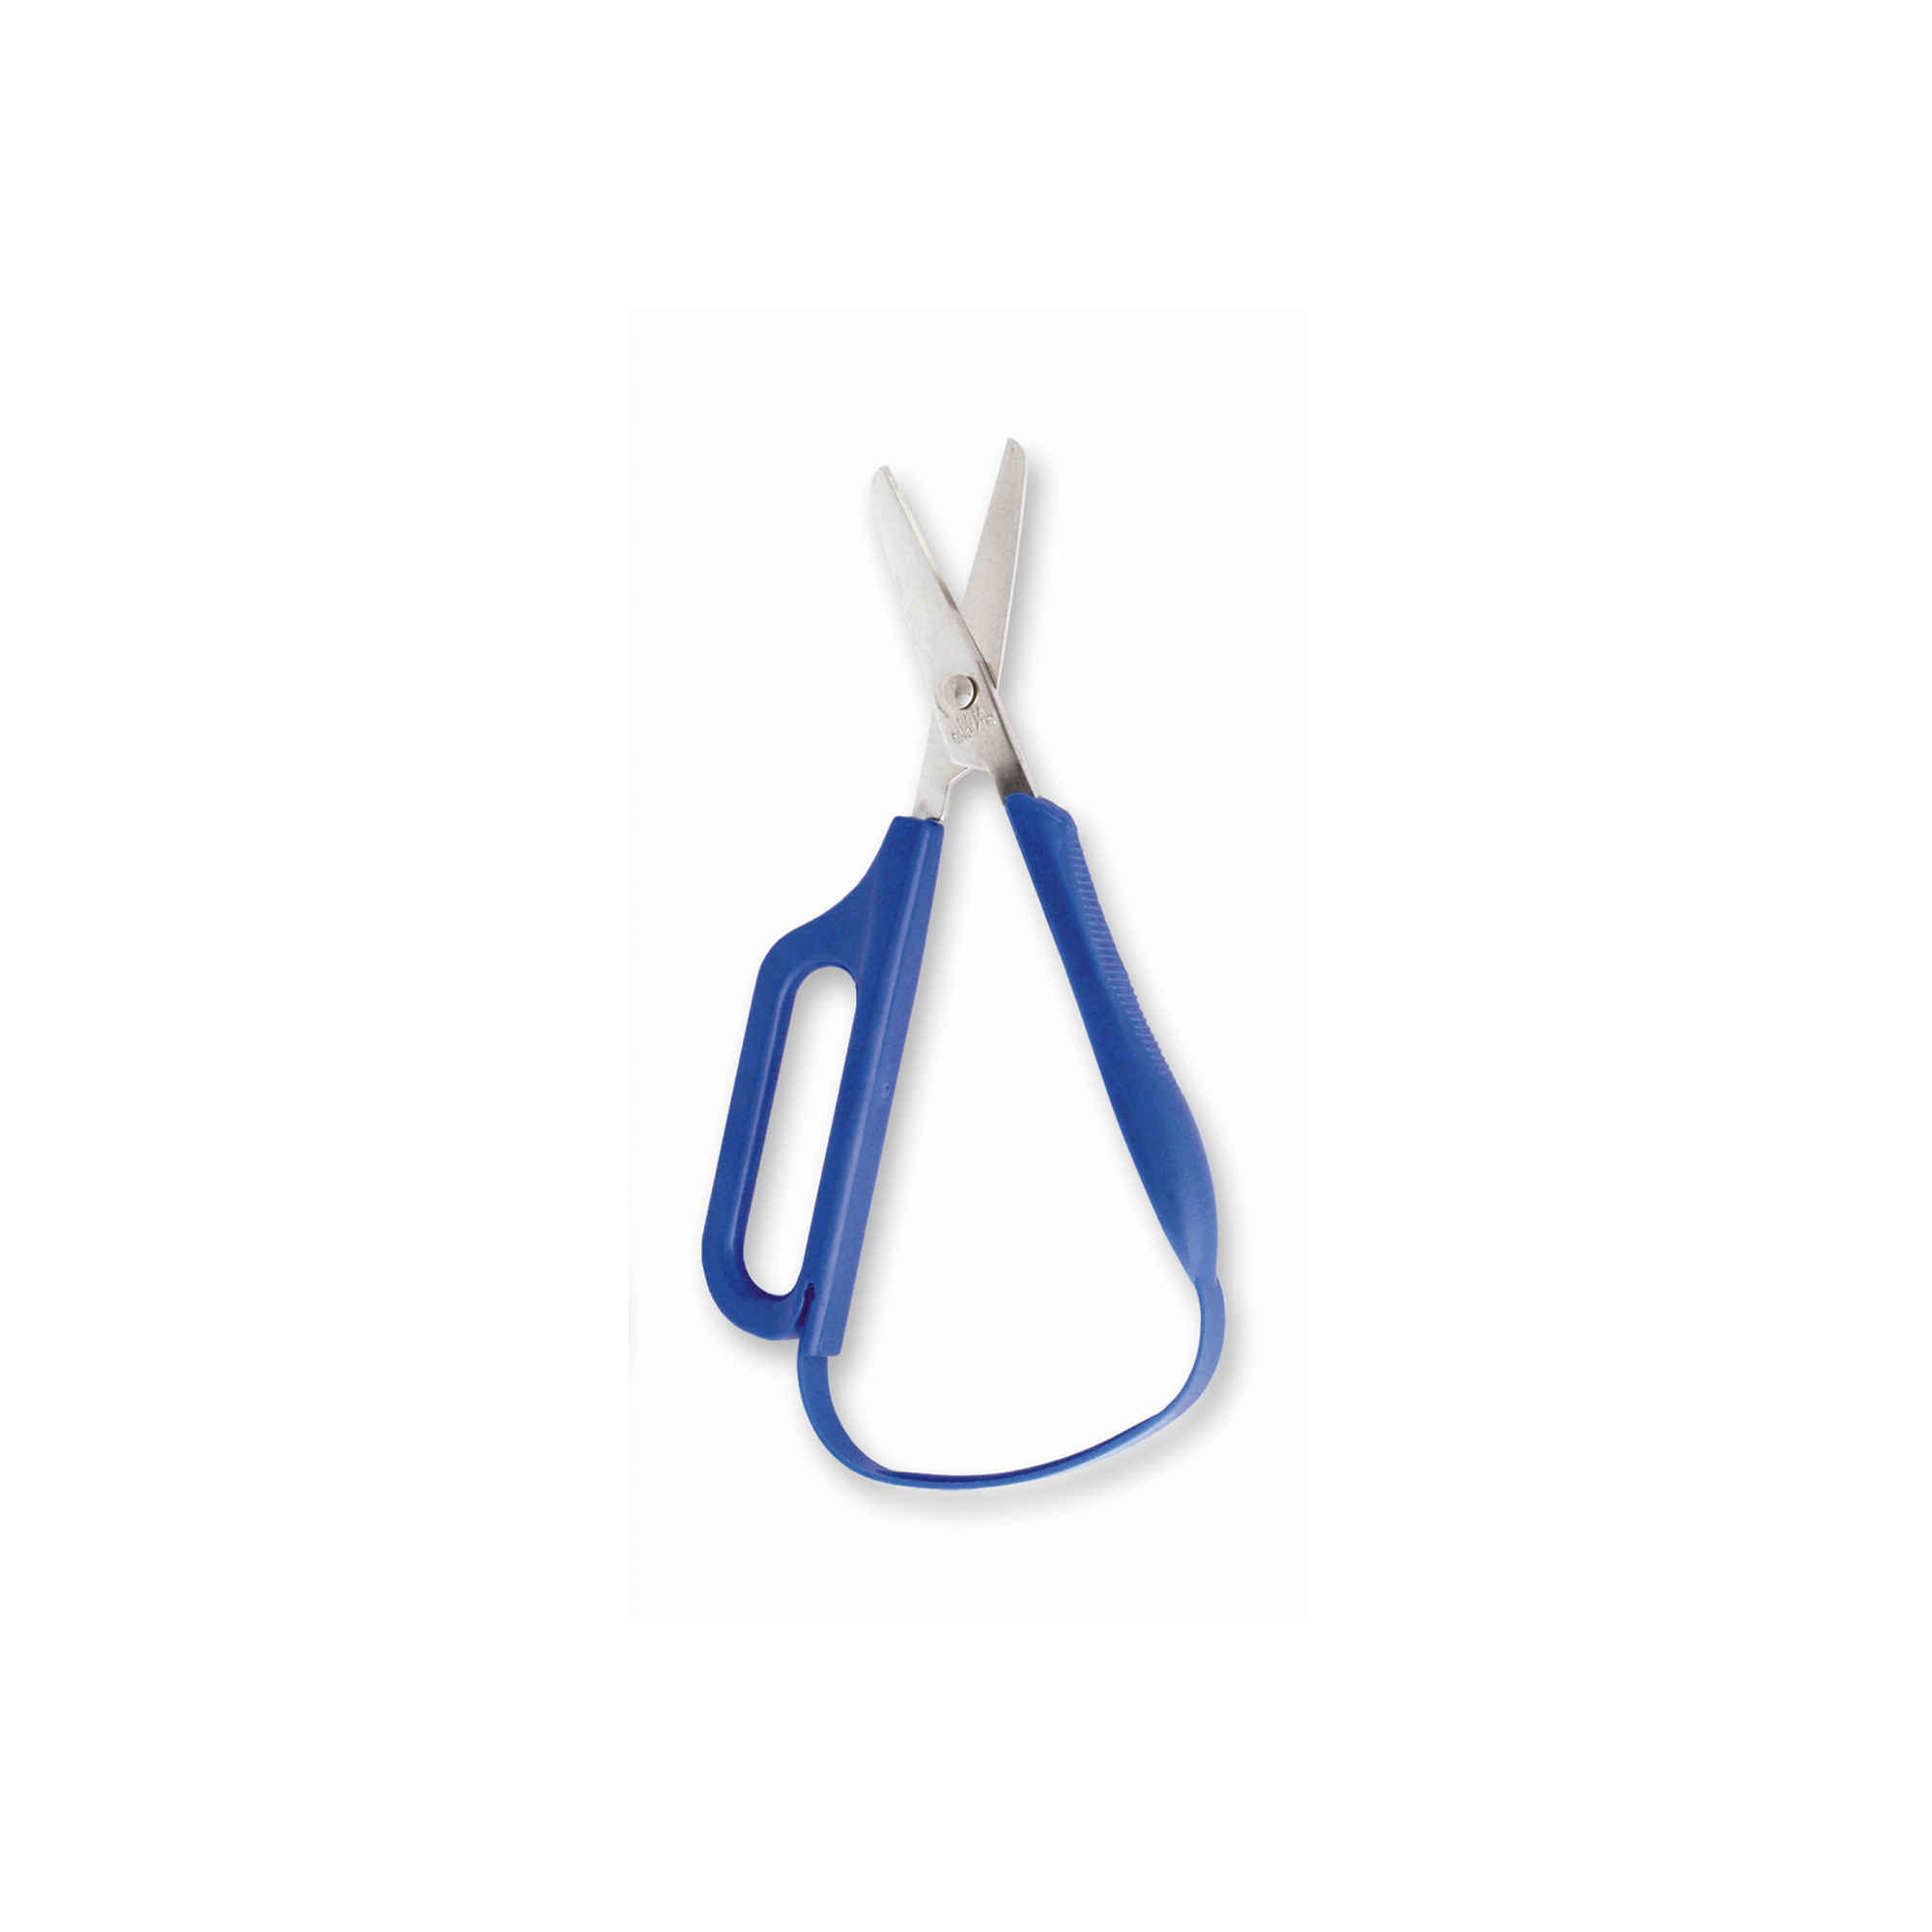 Sundo EASI-GRIP Scissors with Finger Hole, round, 4.5 cm, blue, Right